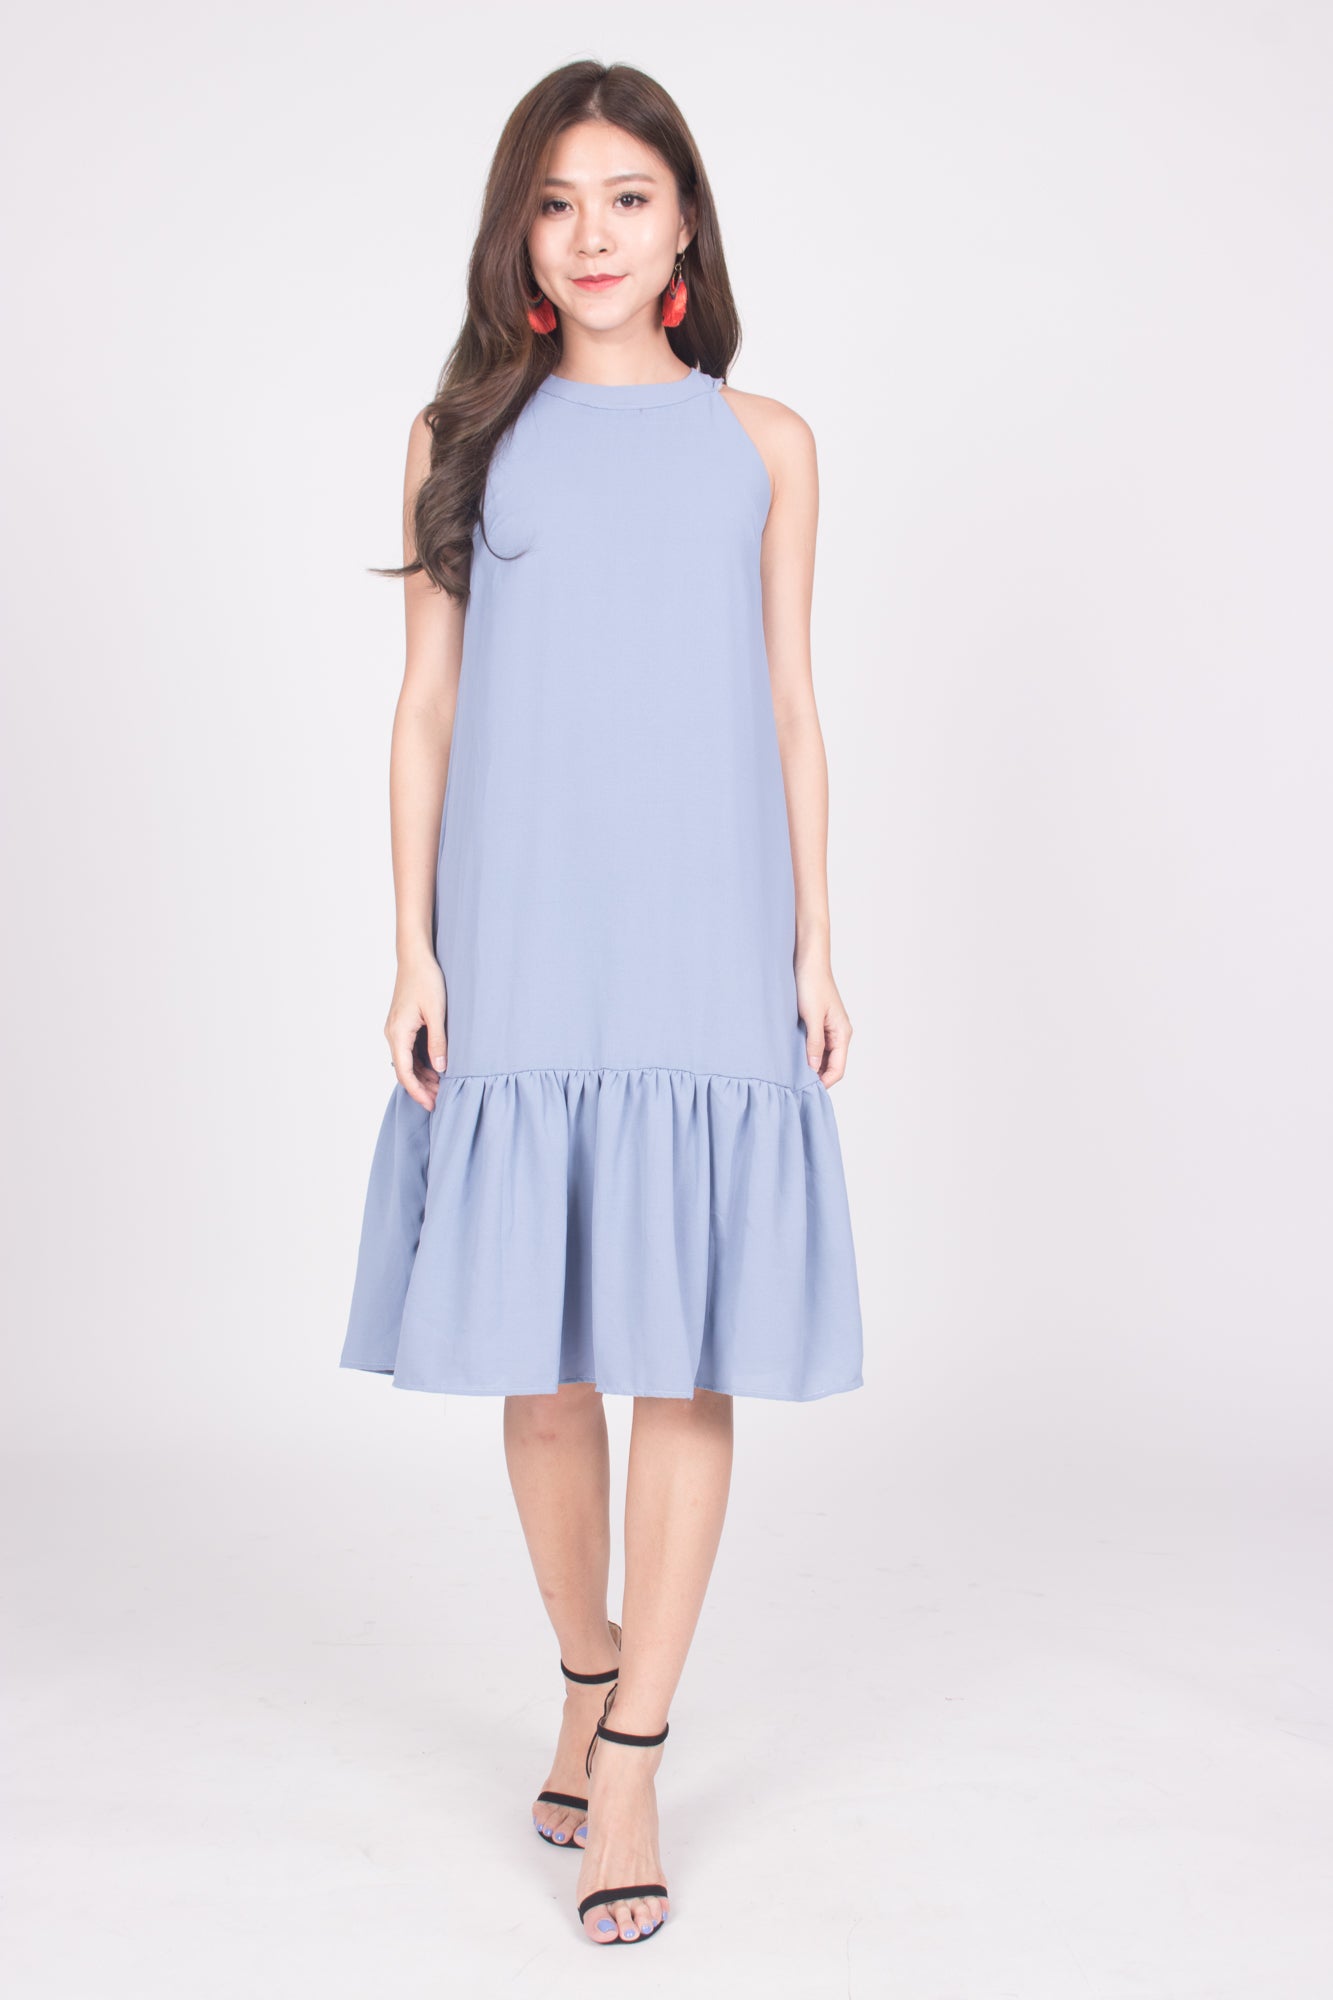 Heiley Halter Dress in Blue